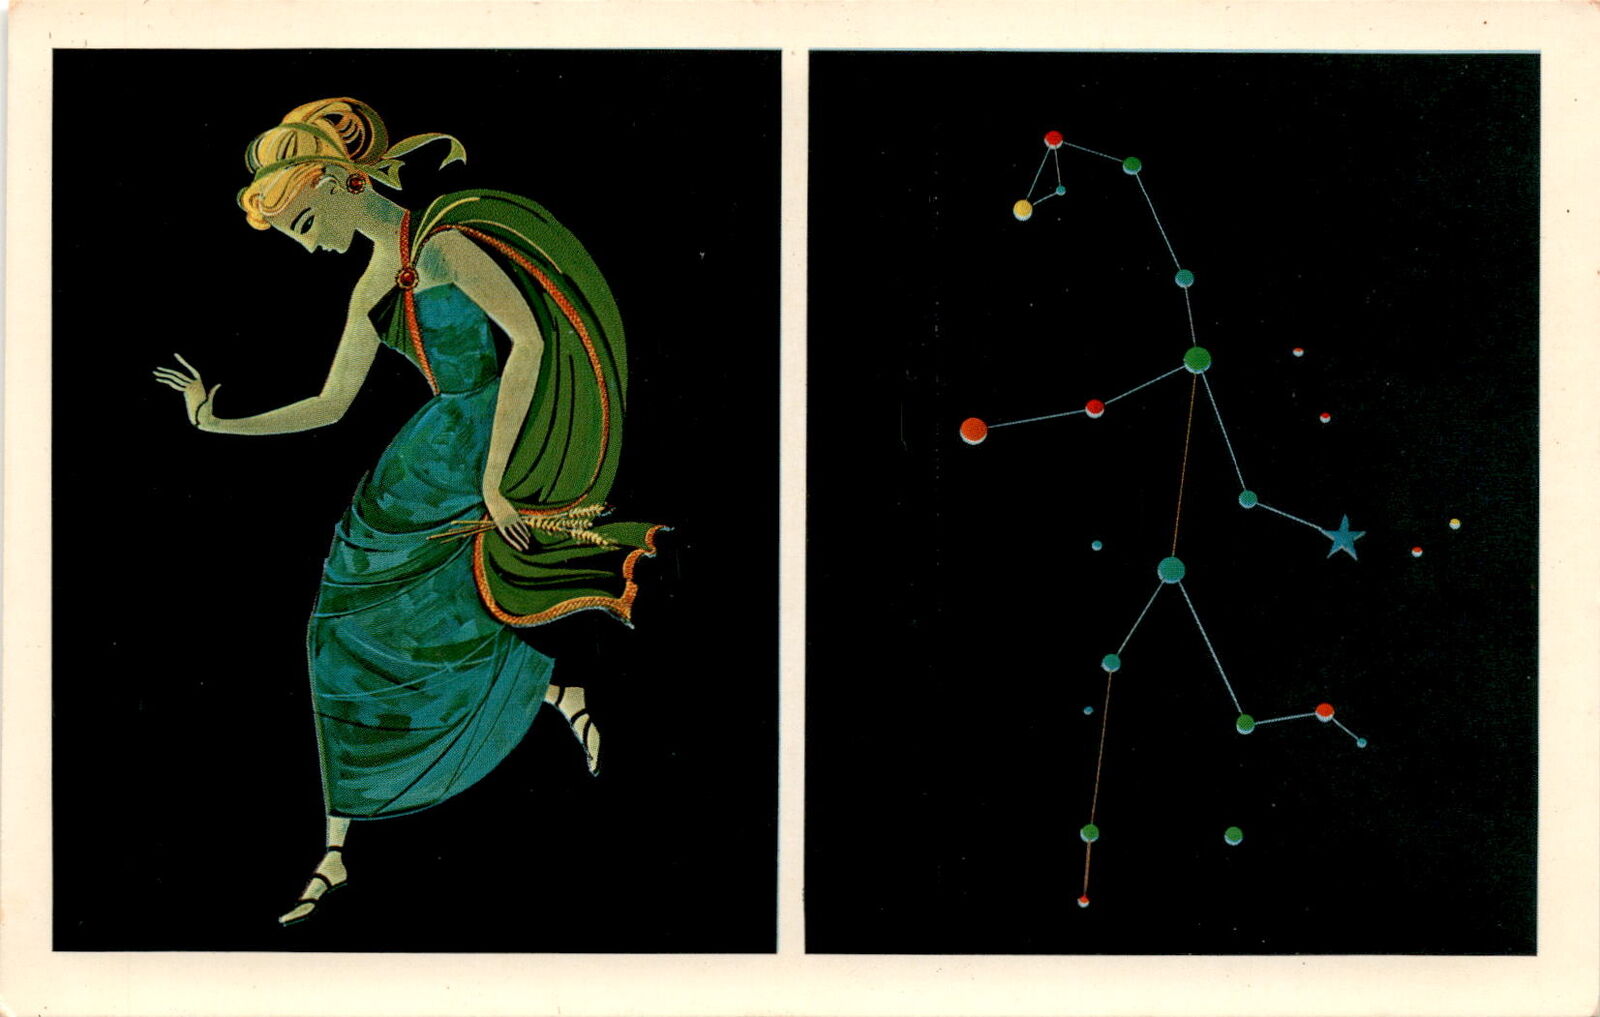 Virgo, maiden, sheaf of grain, Egyptian mythology, Typhon, Milky Way, Postcard